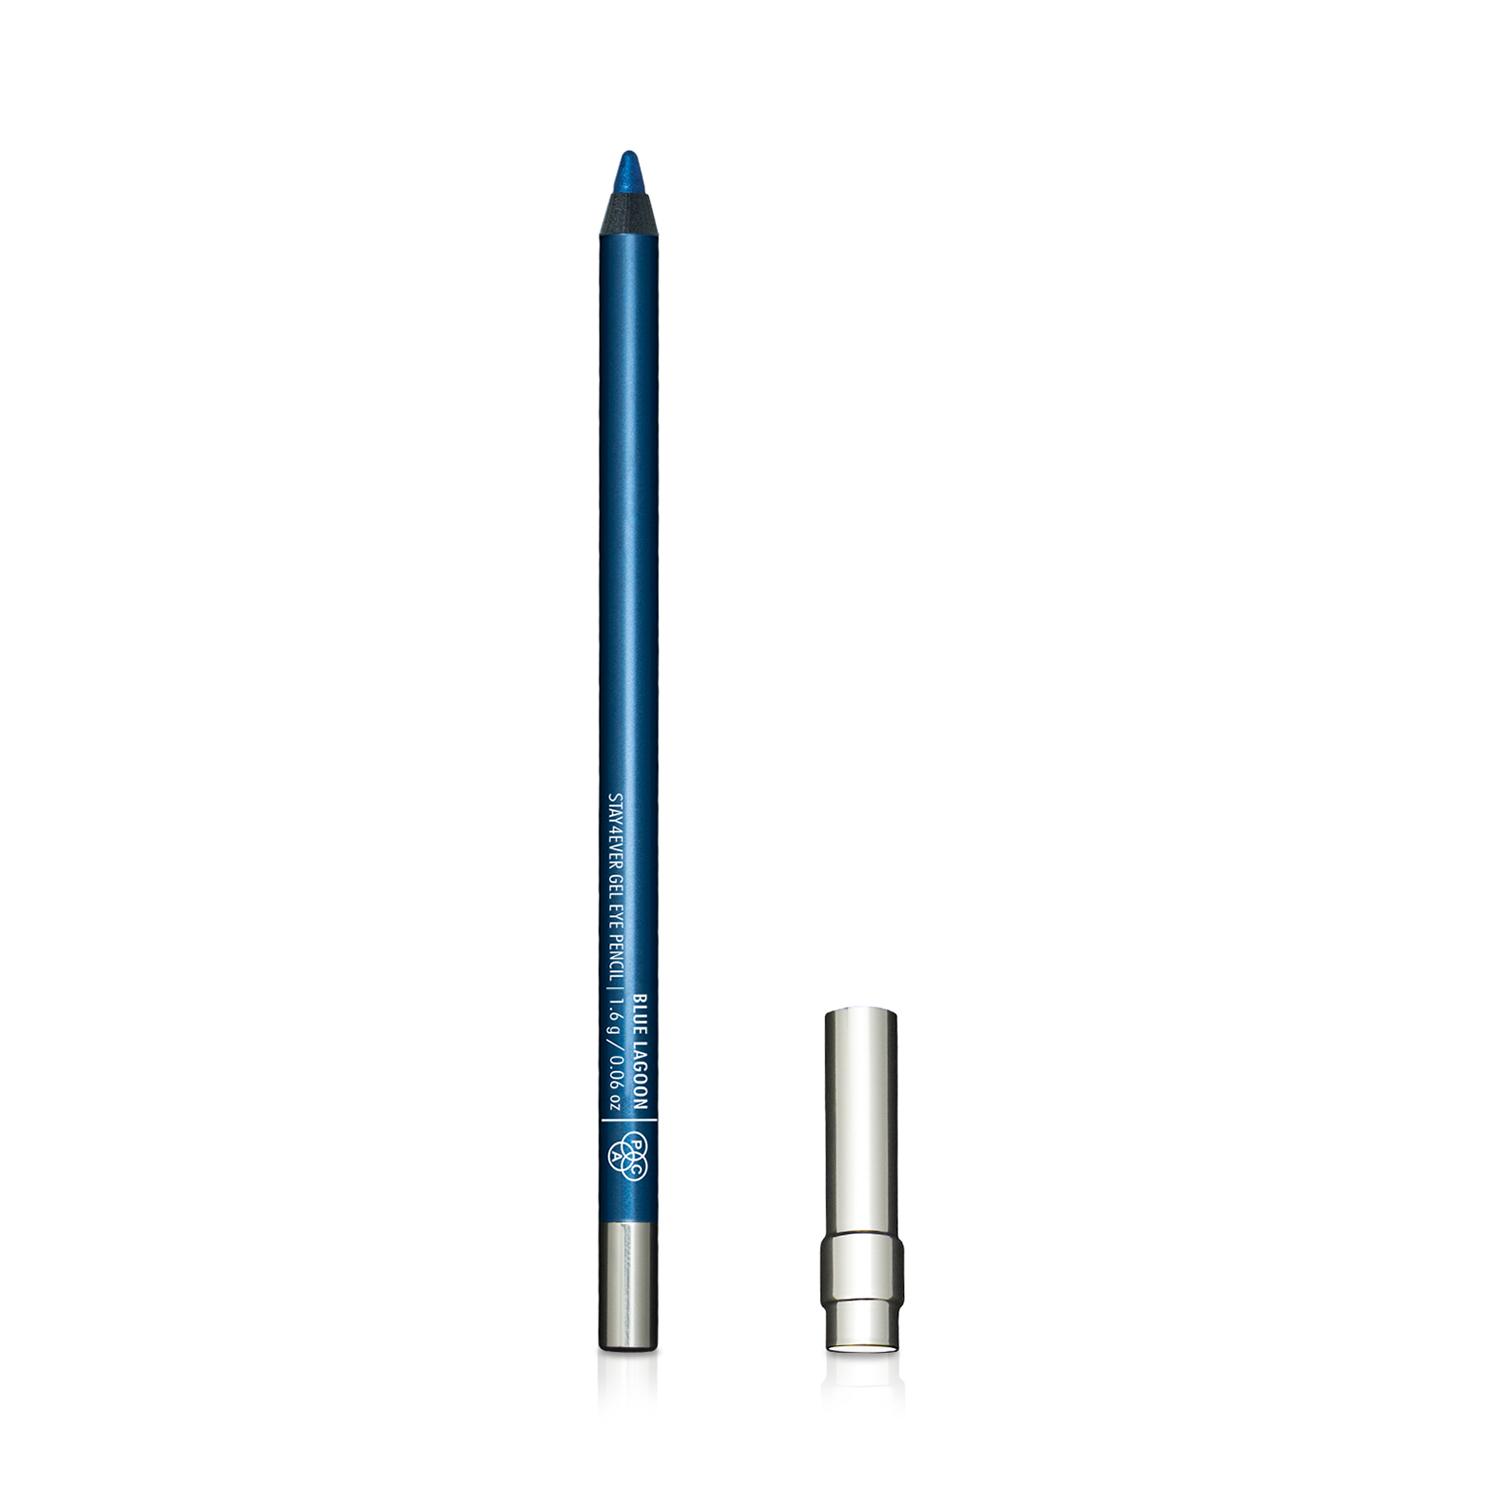 PAC | PAC Stay4Ever Gel Eye Pencil - Blue Lagoon (1.6g)